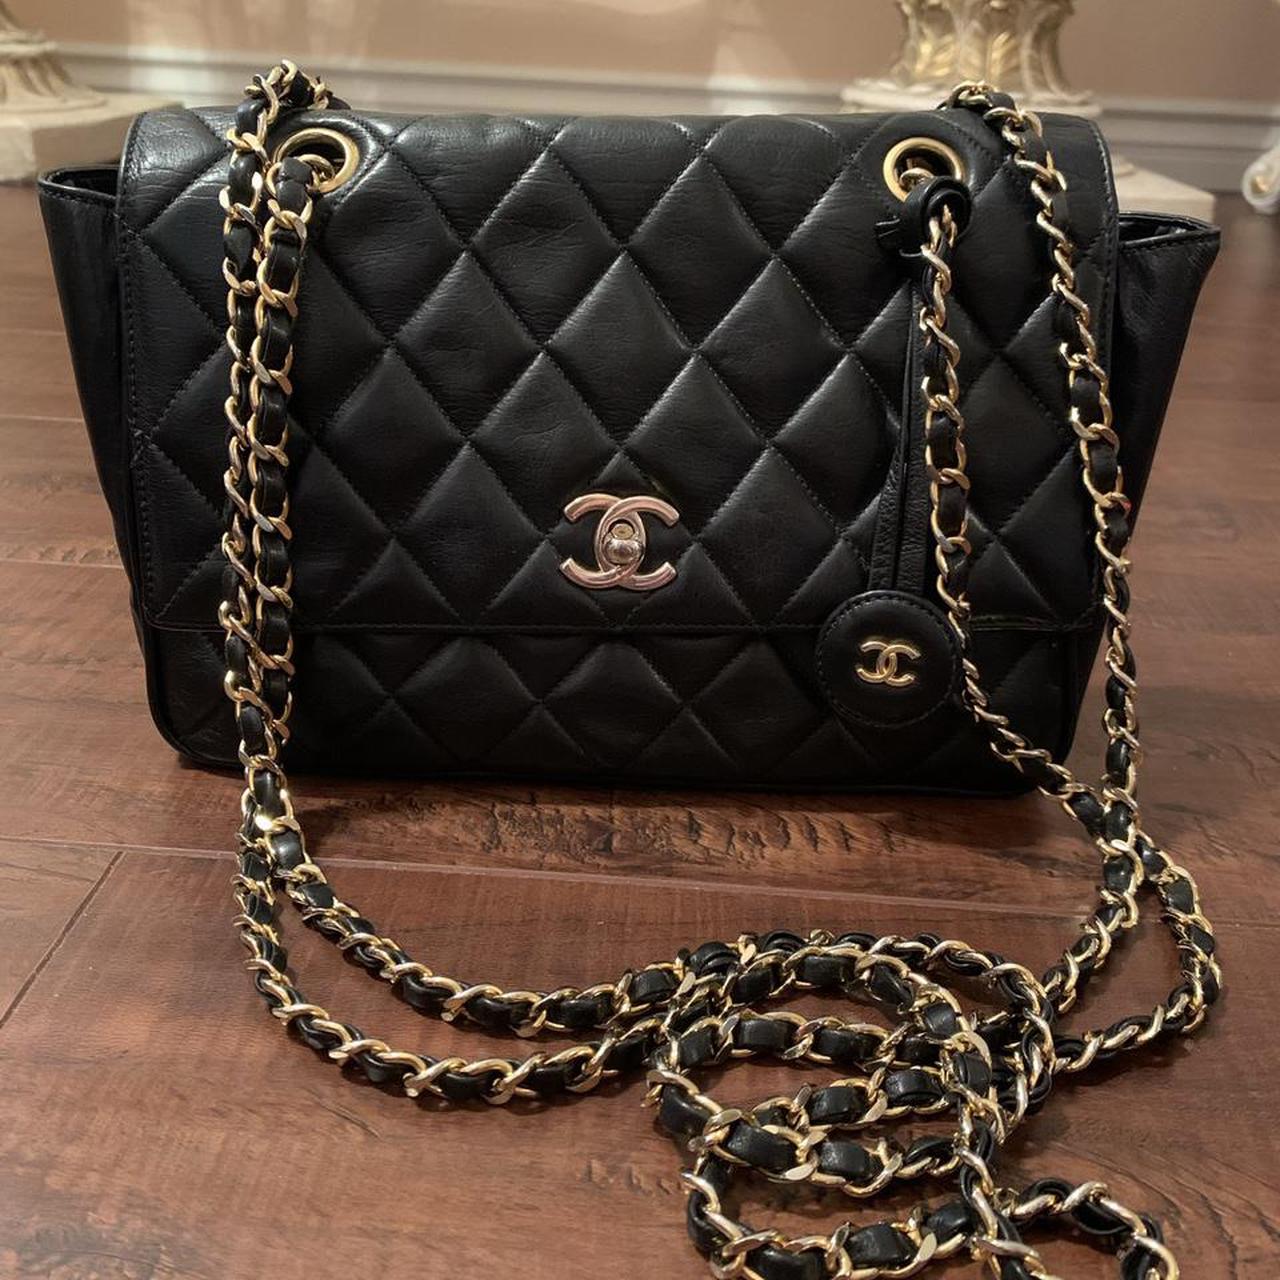 Chanel Women's Black and Gold Bag | Depop